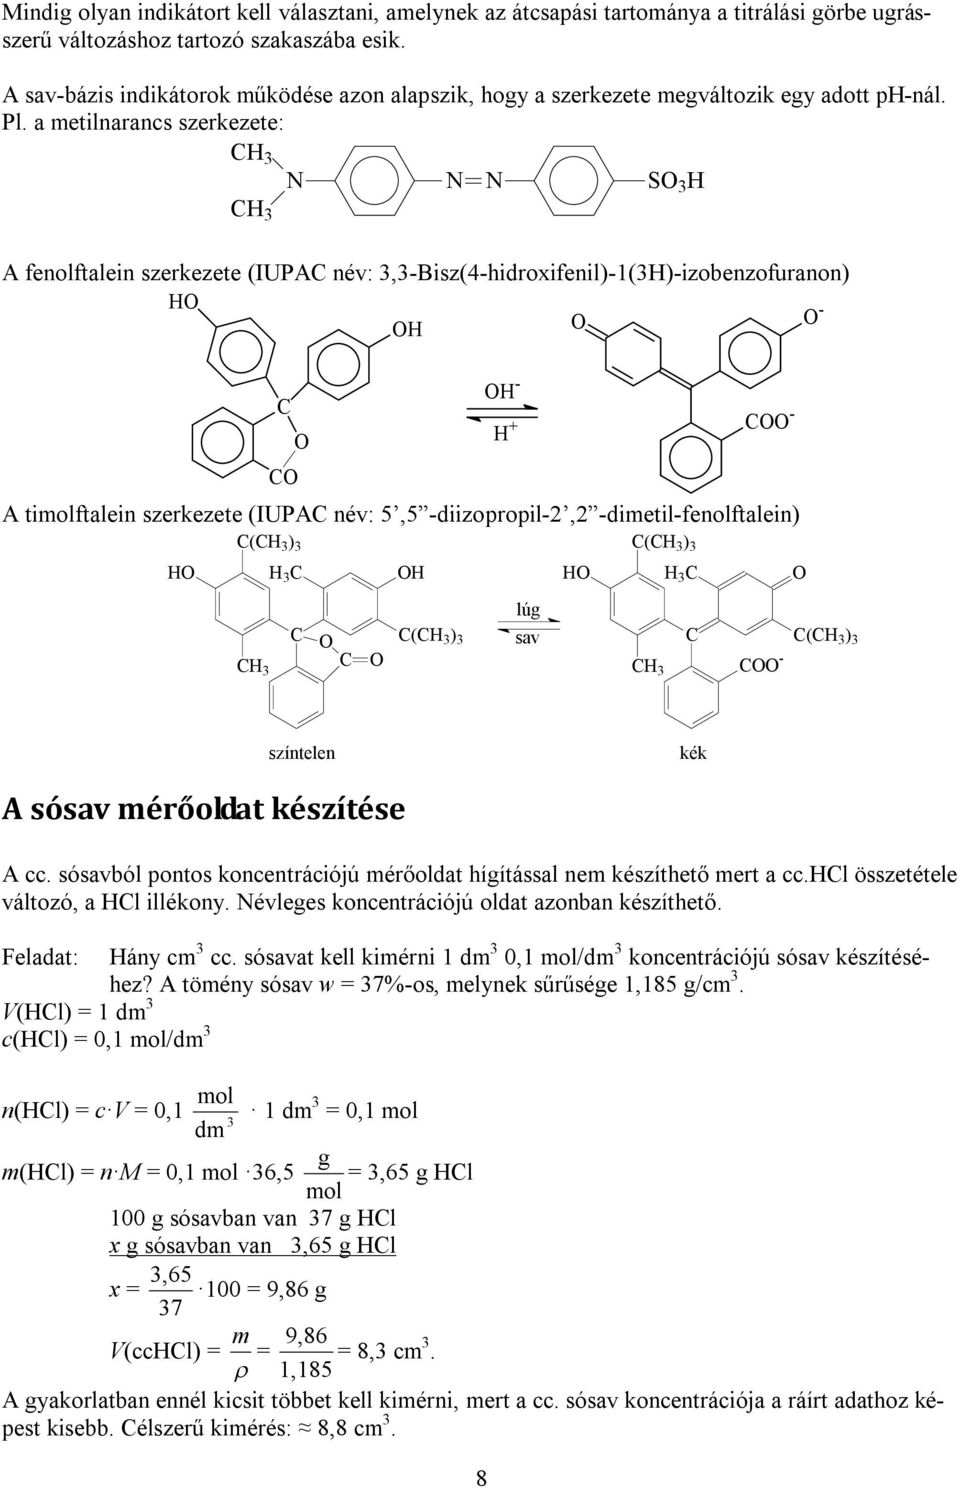 a metilnarancs szerkezete: CH N N N S H CH A fenolftalein szerkezete (IUPAC név:,-bisz(4-hidroxifenil)-1(h)-izobenzofuranon) H H - C C H - H + C - A tiftalein szerkezete (IUPAC név: 5,5